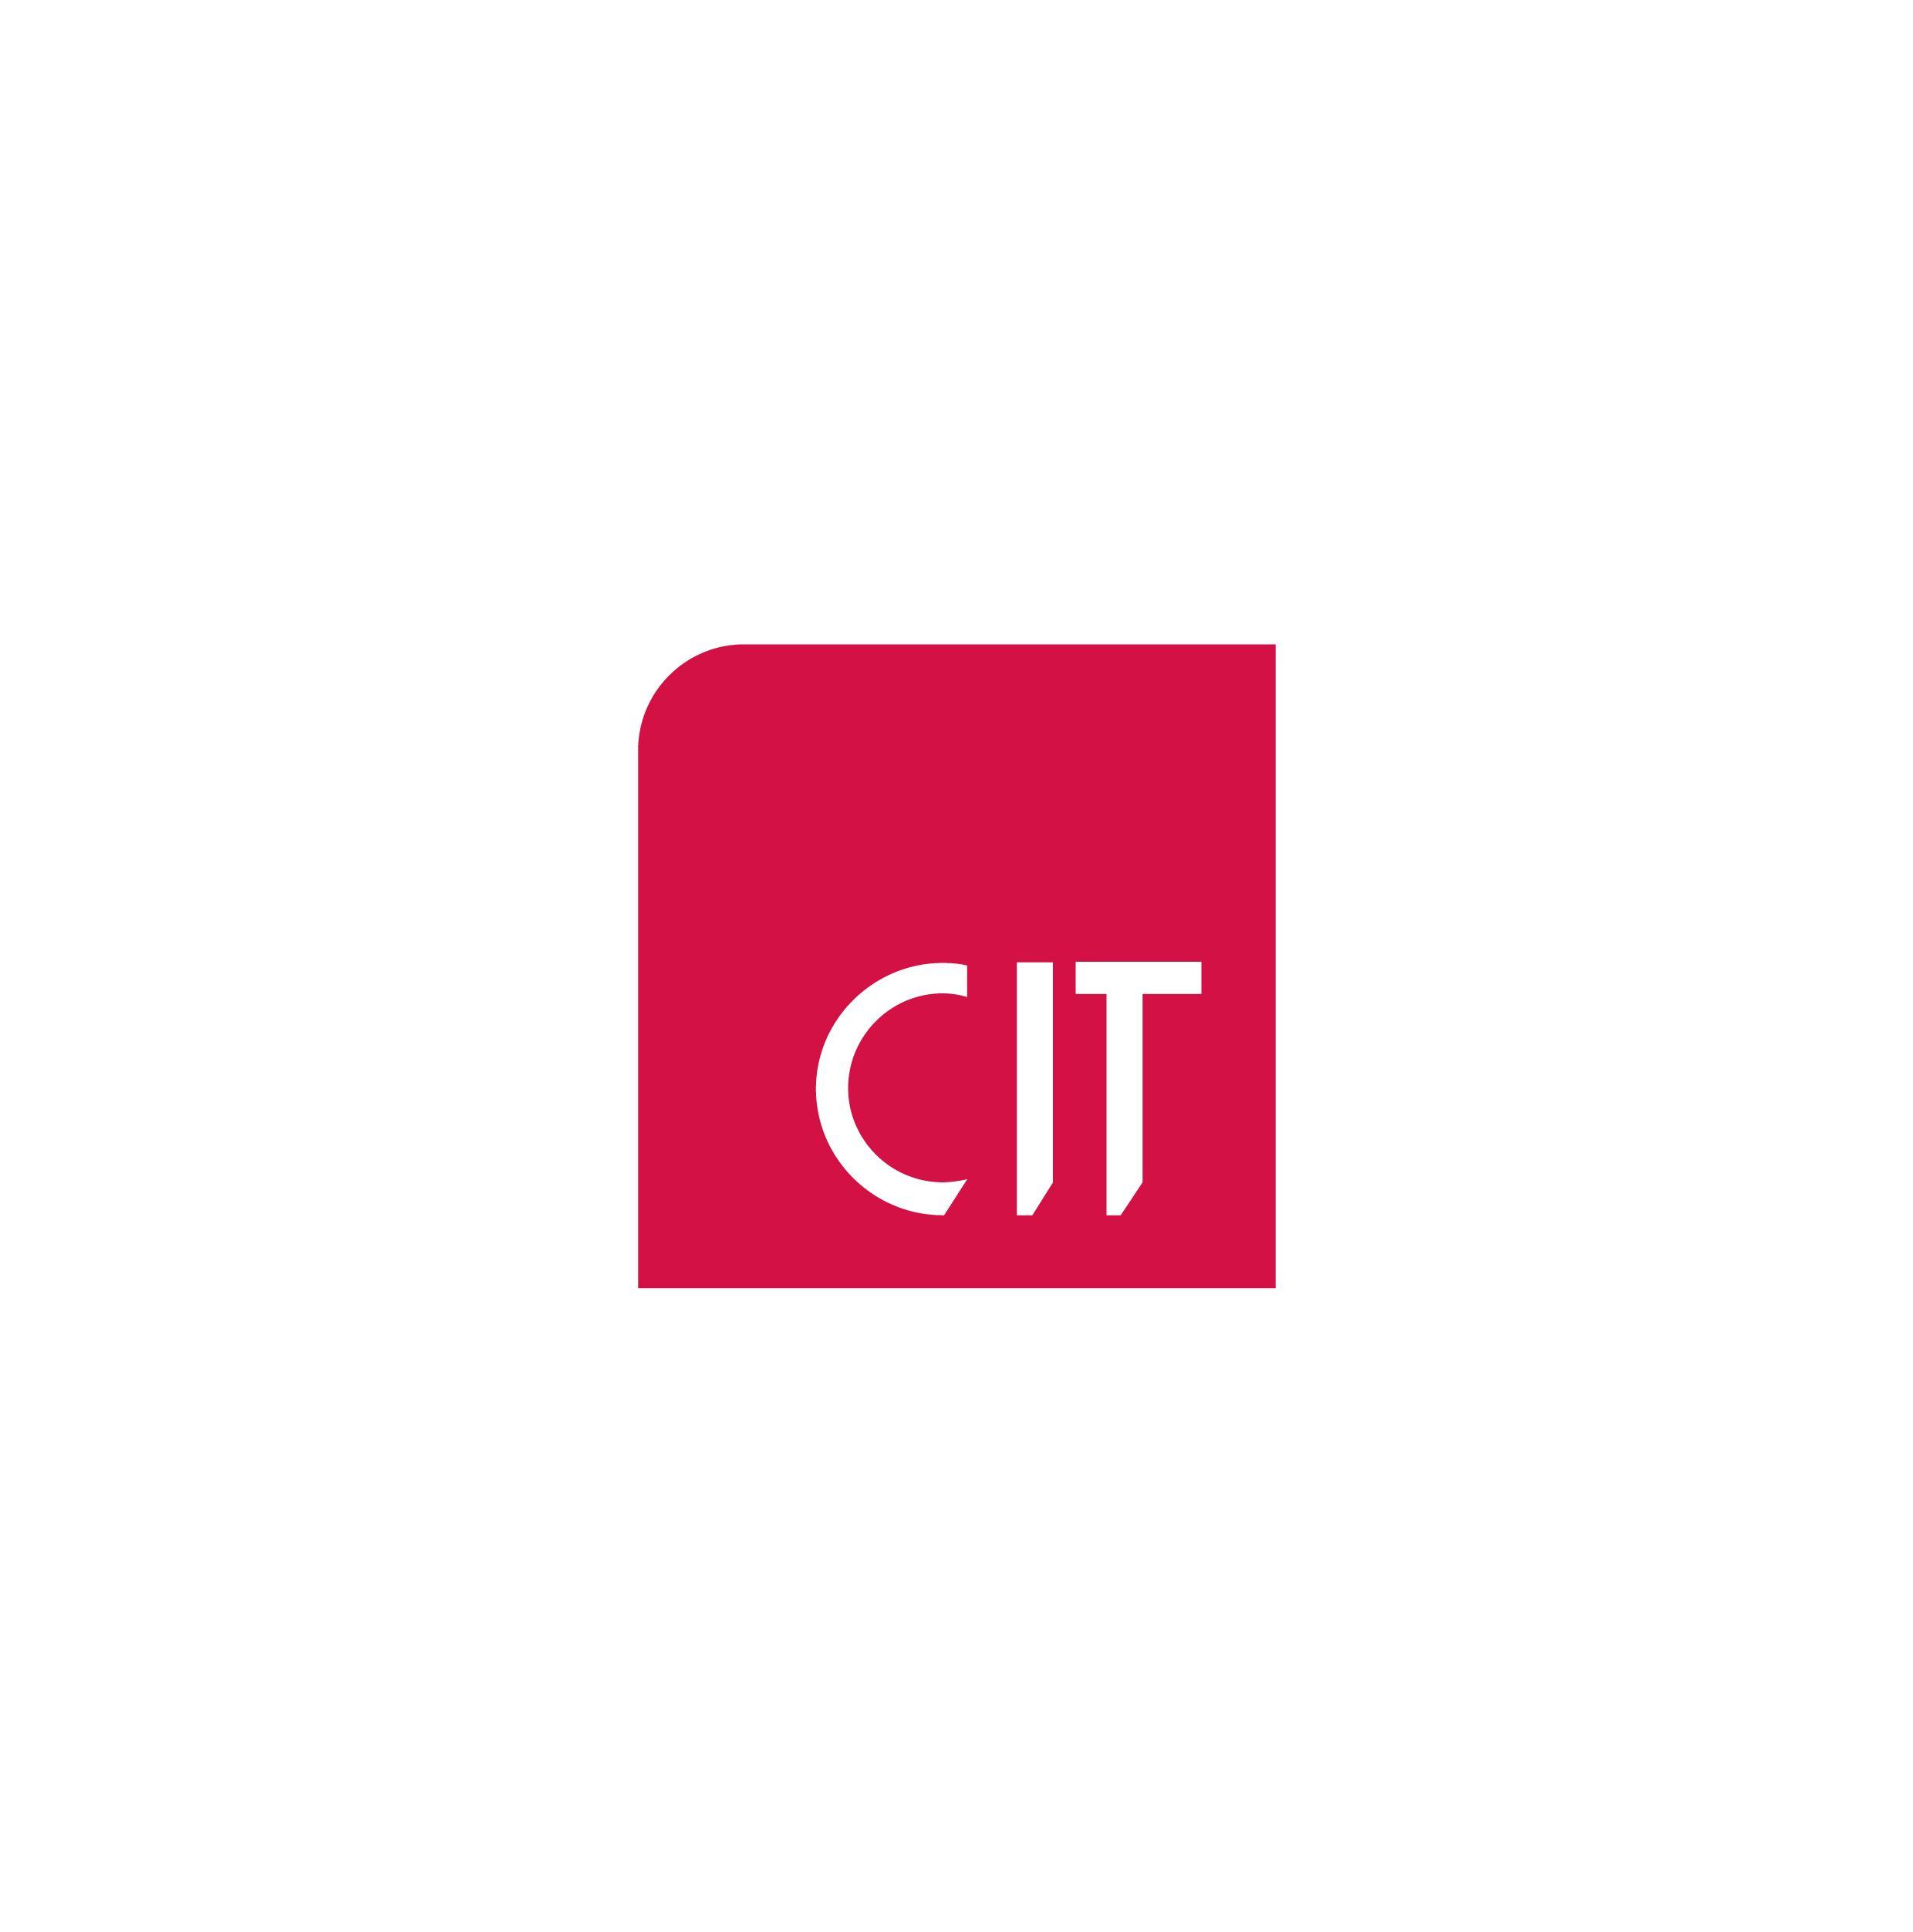 CIT Logo - Marketing Unit - Logos & Crests